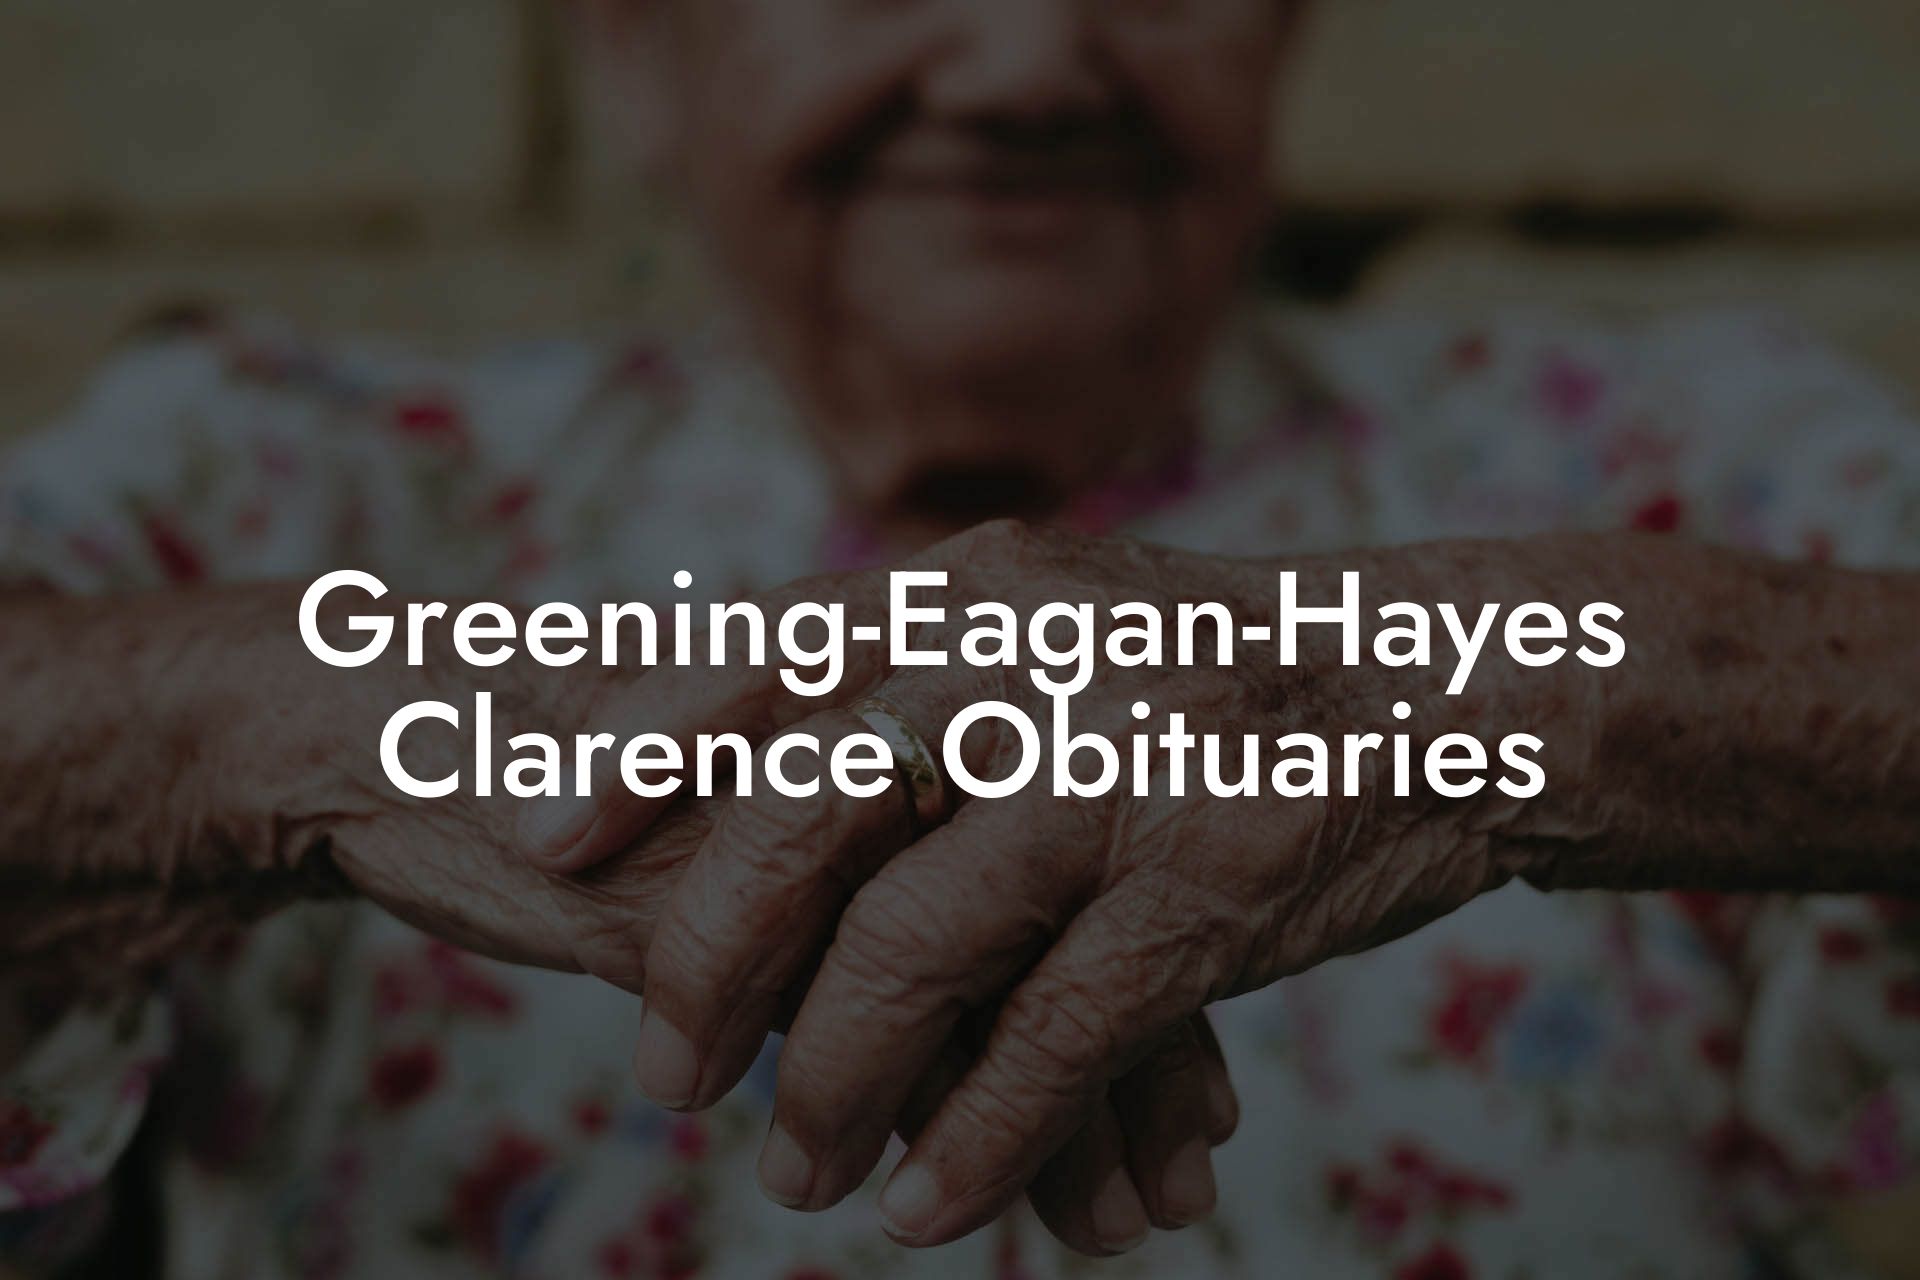 Greening-Eagan-Hayes Clarence Obituaries